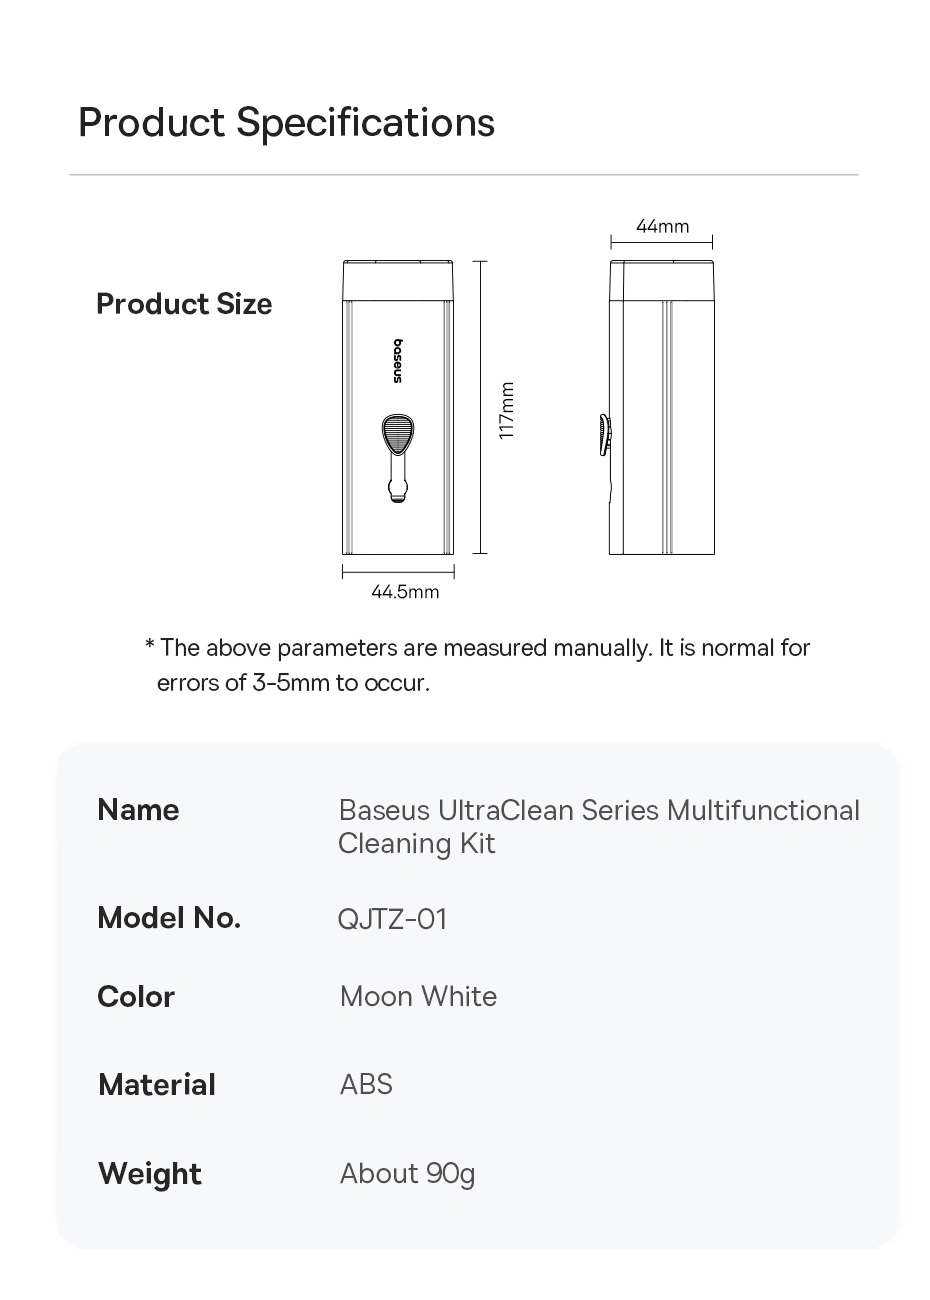 Baseus UltraClean Series 8 in 1 Multifunctional Cleaning Kit